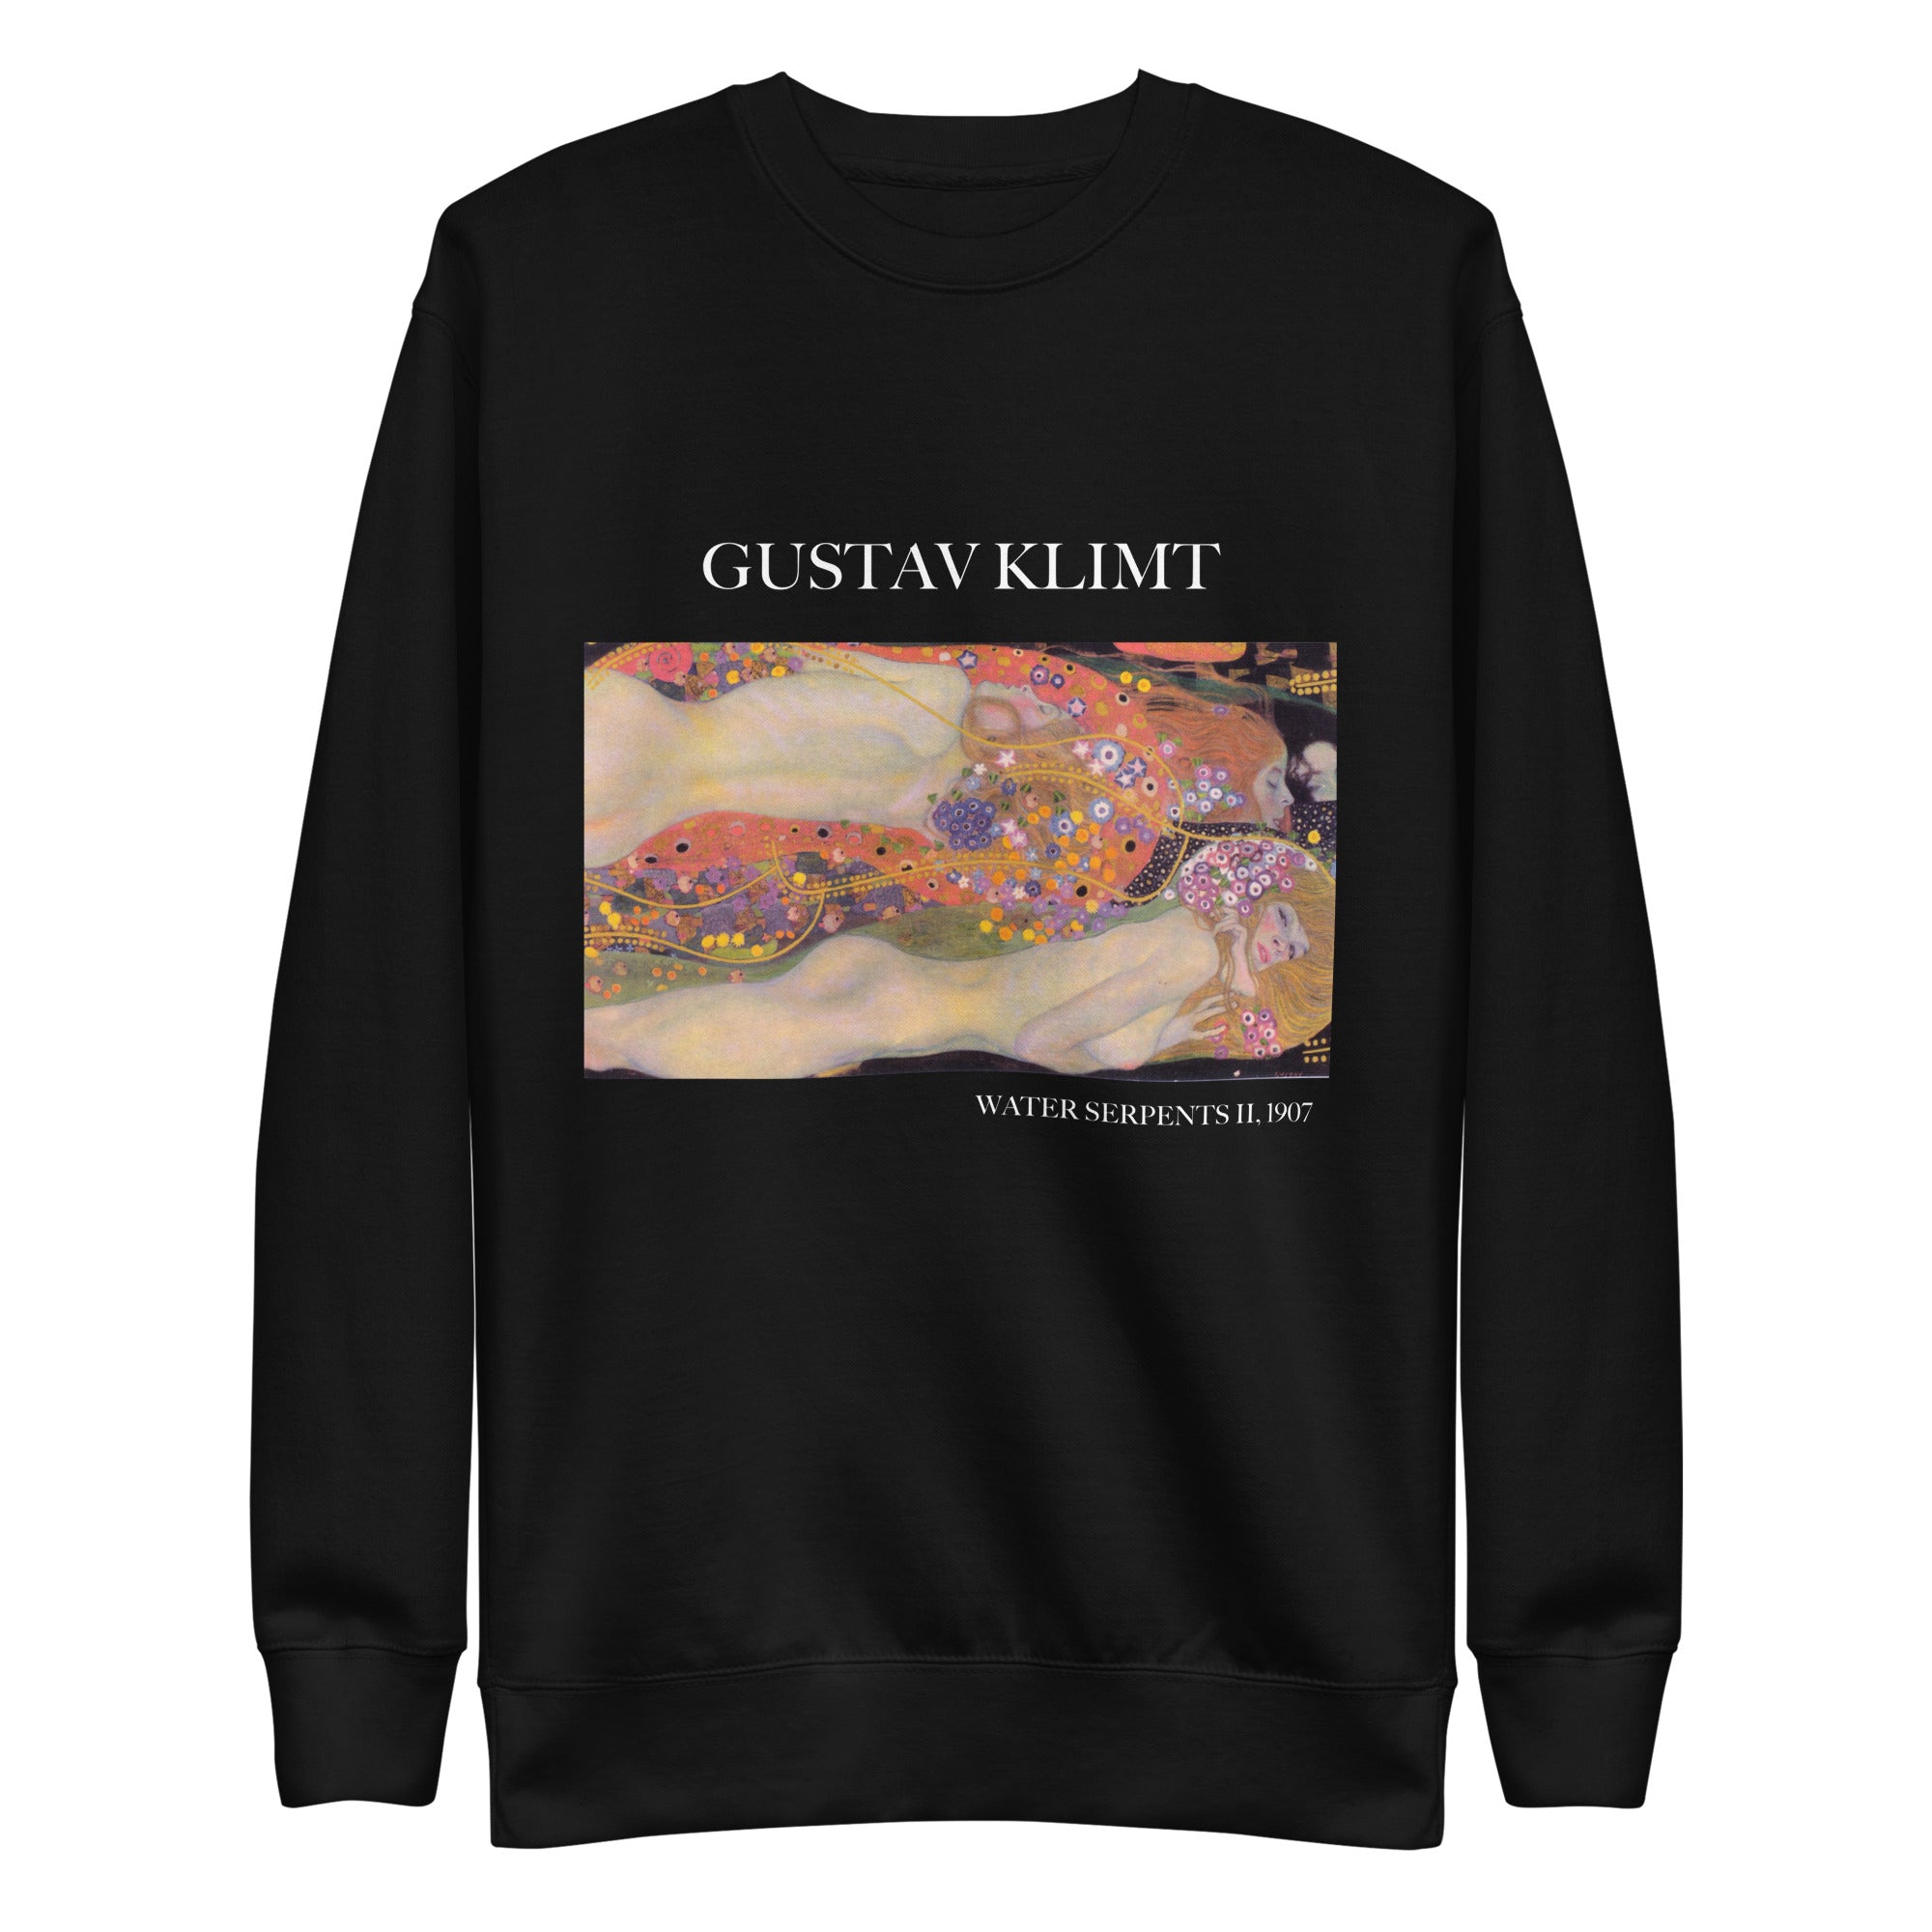 Gustav Klimt 'Water Serpents II' Famous Painting Sweatshirt | Unisex Premium Sweatshirt